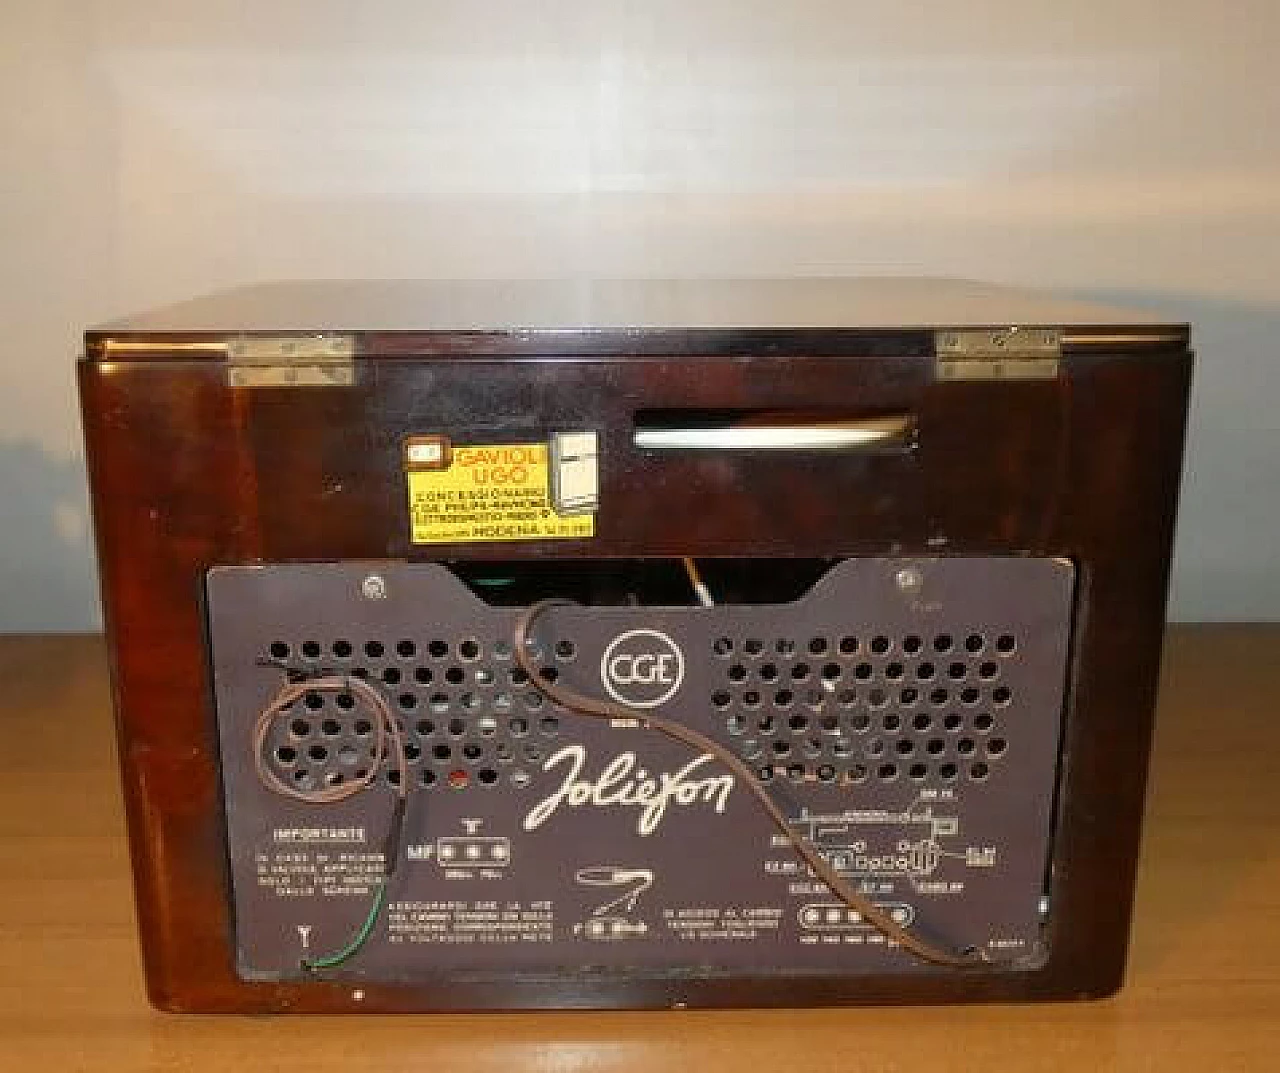 Wood Joliefon RFS 6597 turntable radio by CGE, 1950s 15